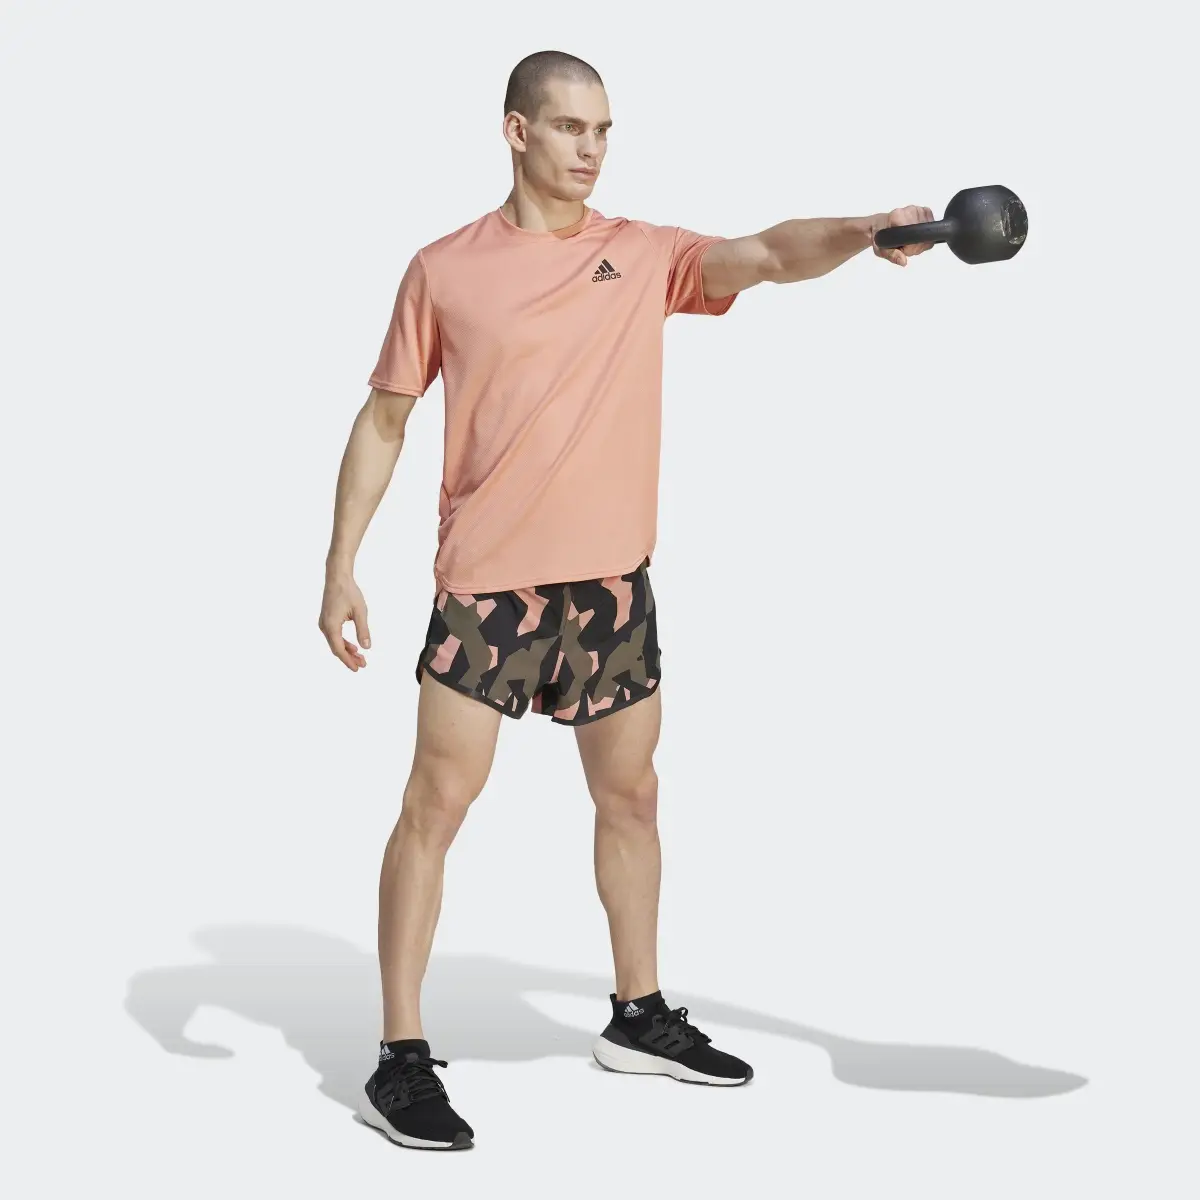 Adidas Shorts Designed for Training Pro Series Strength. 3